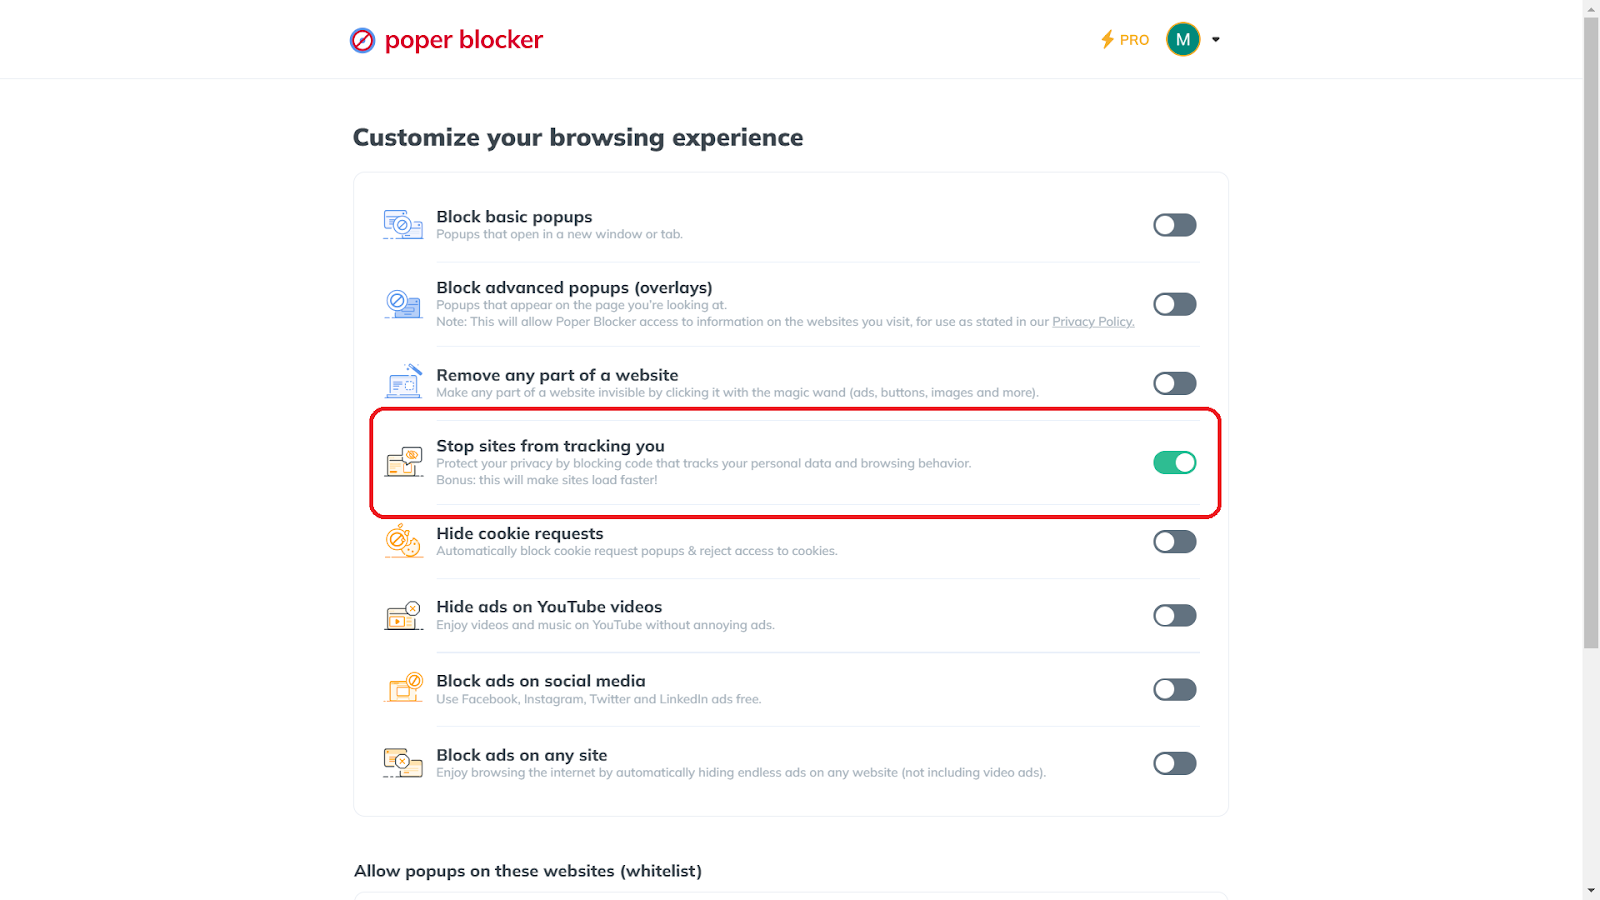 Poper blocker's tracker blocking feature